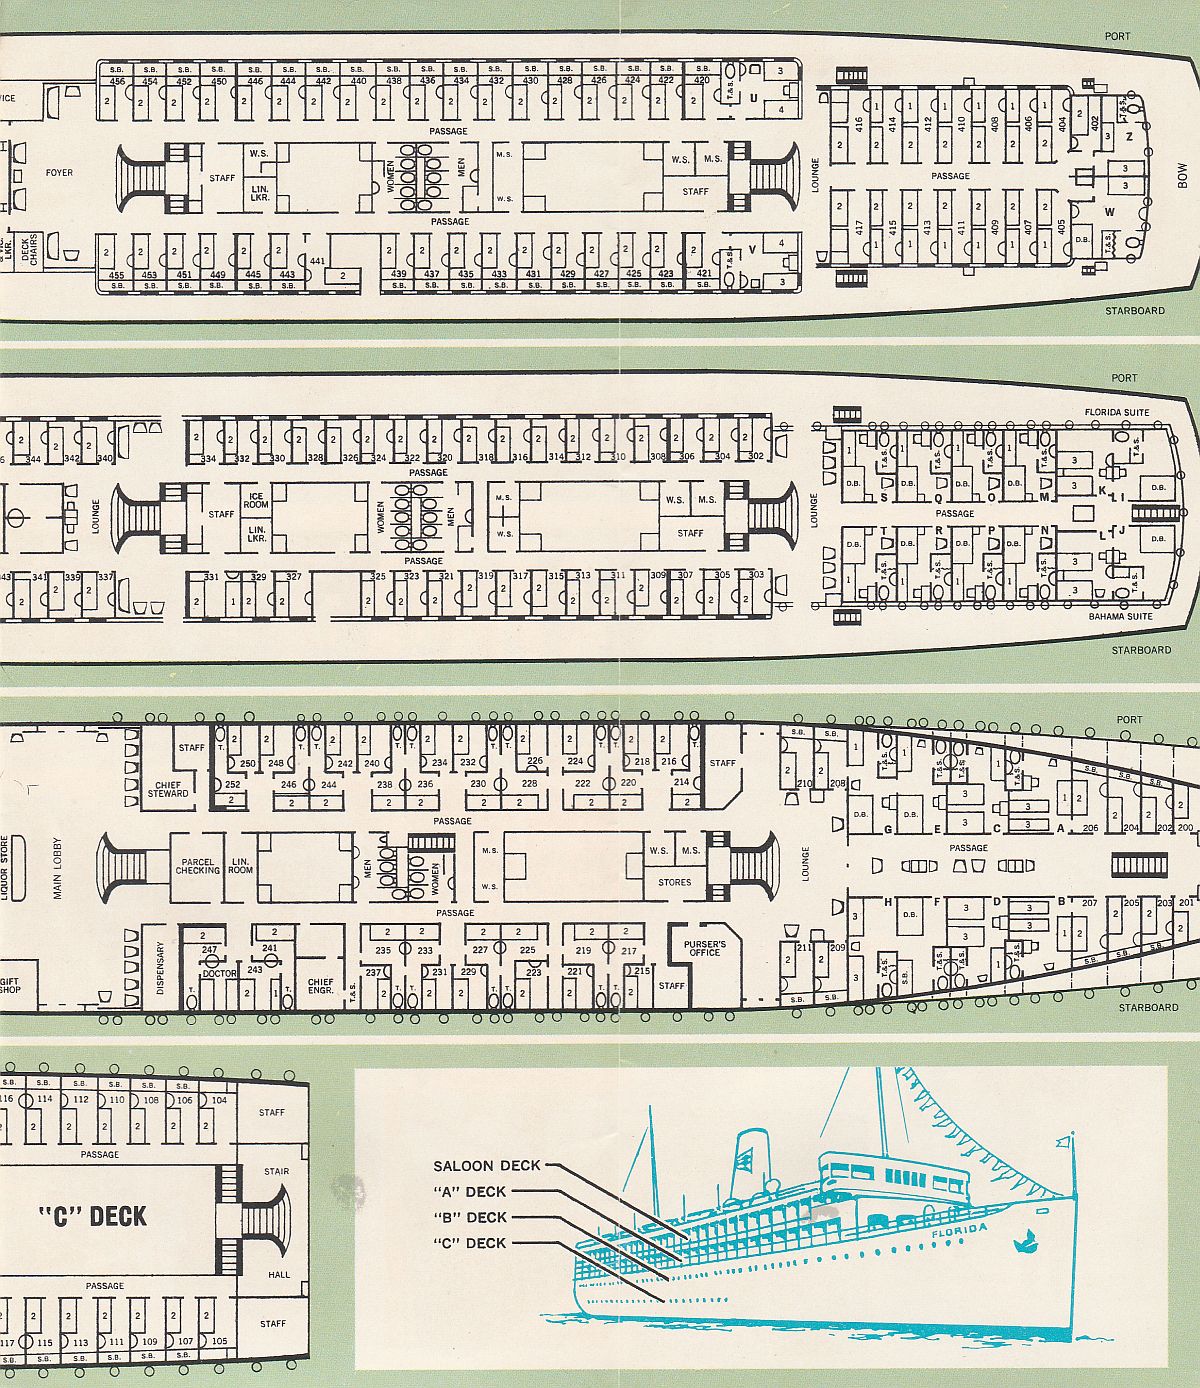 ss Florida Deck plans (cont'd): Right page of deck plans